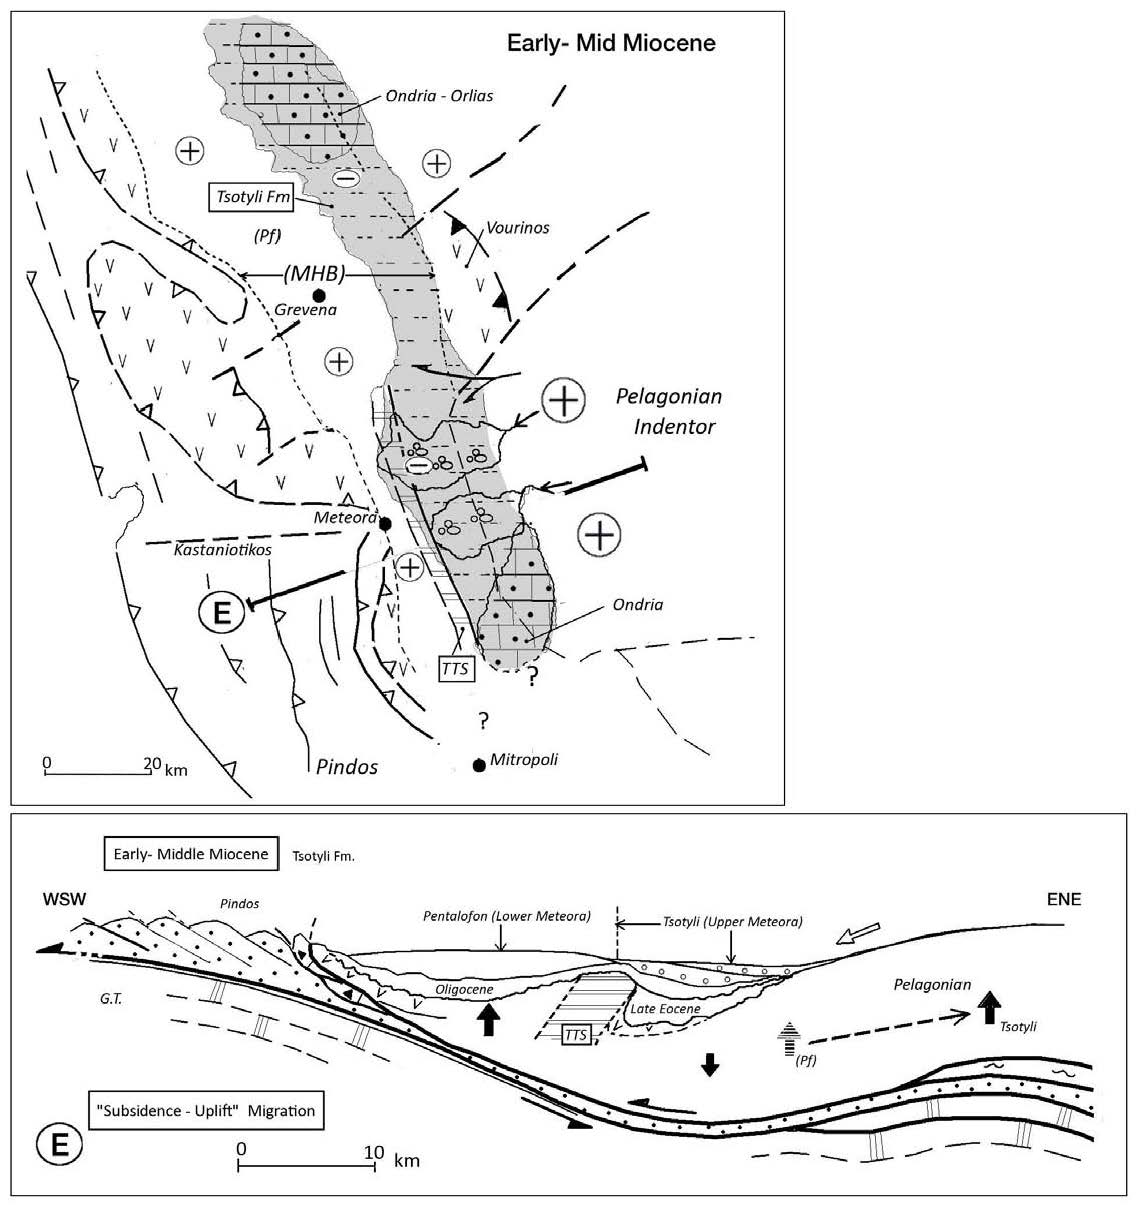 Early-mid Miocene (Tsotyli and Ondria-Orlias Fms)